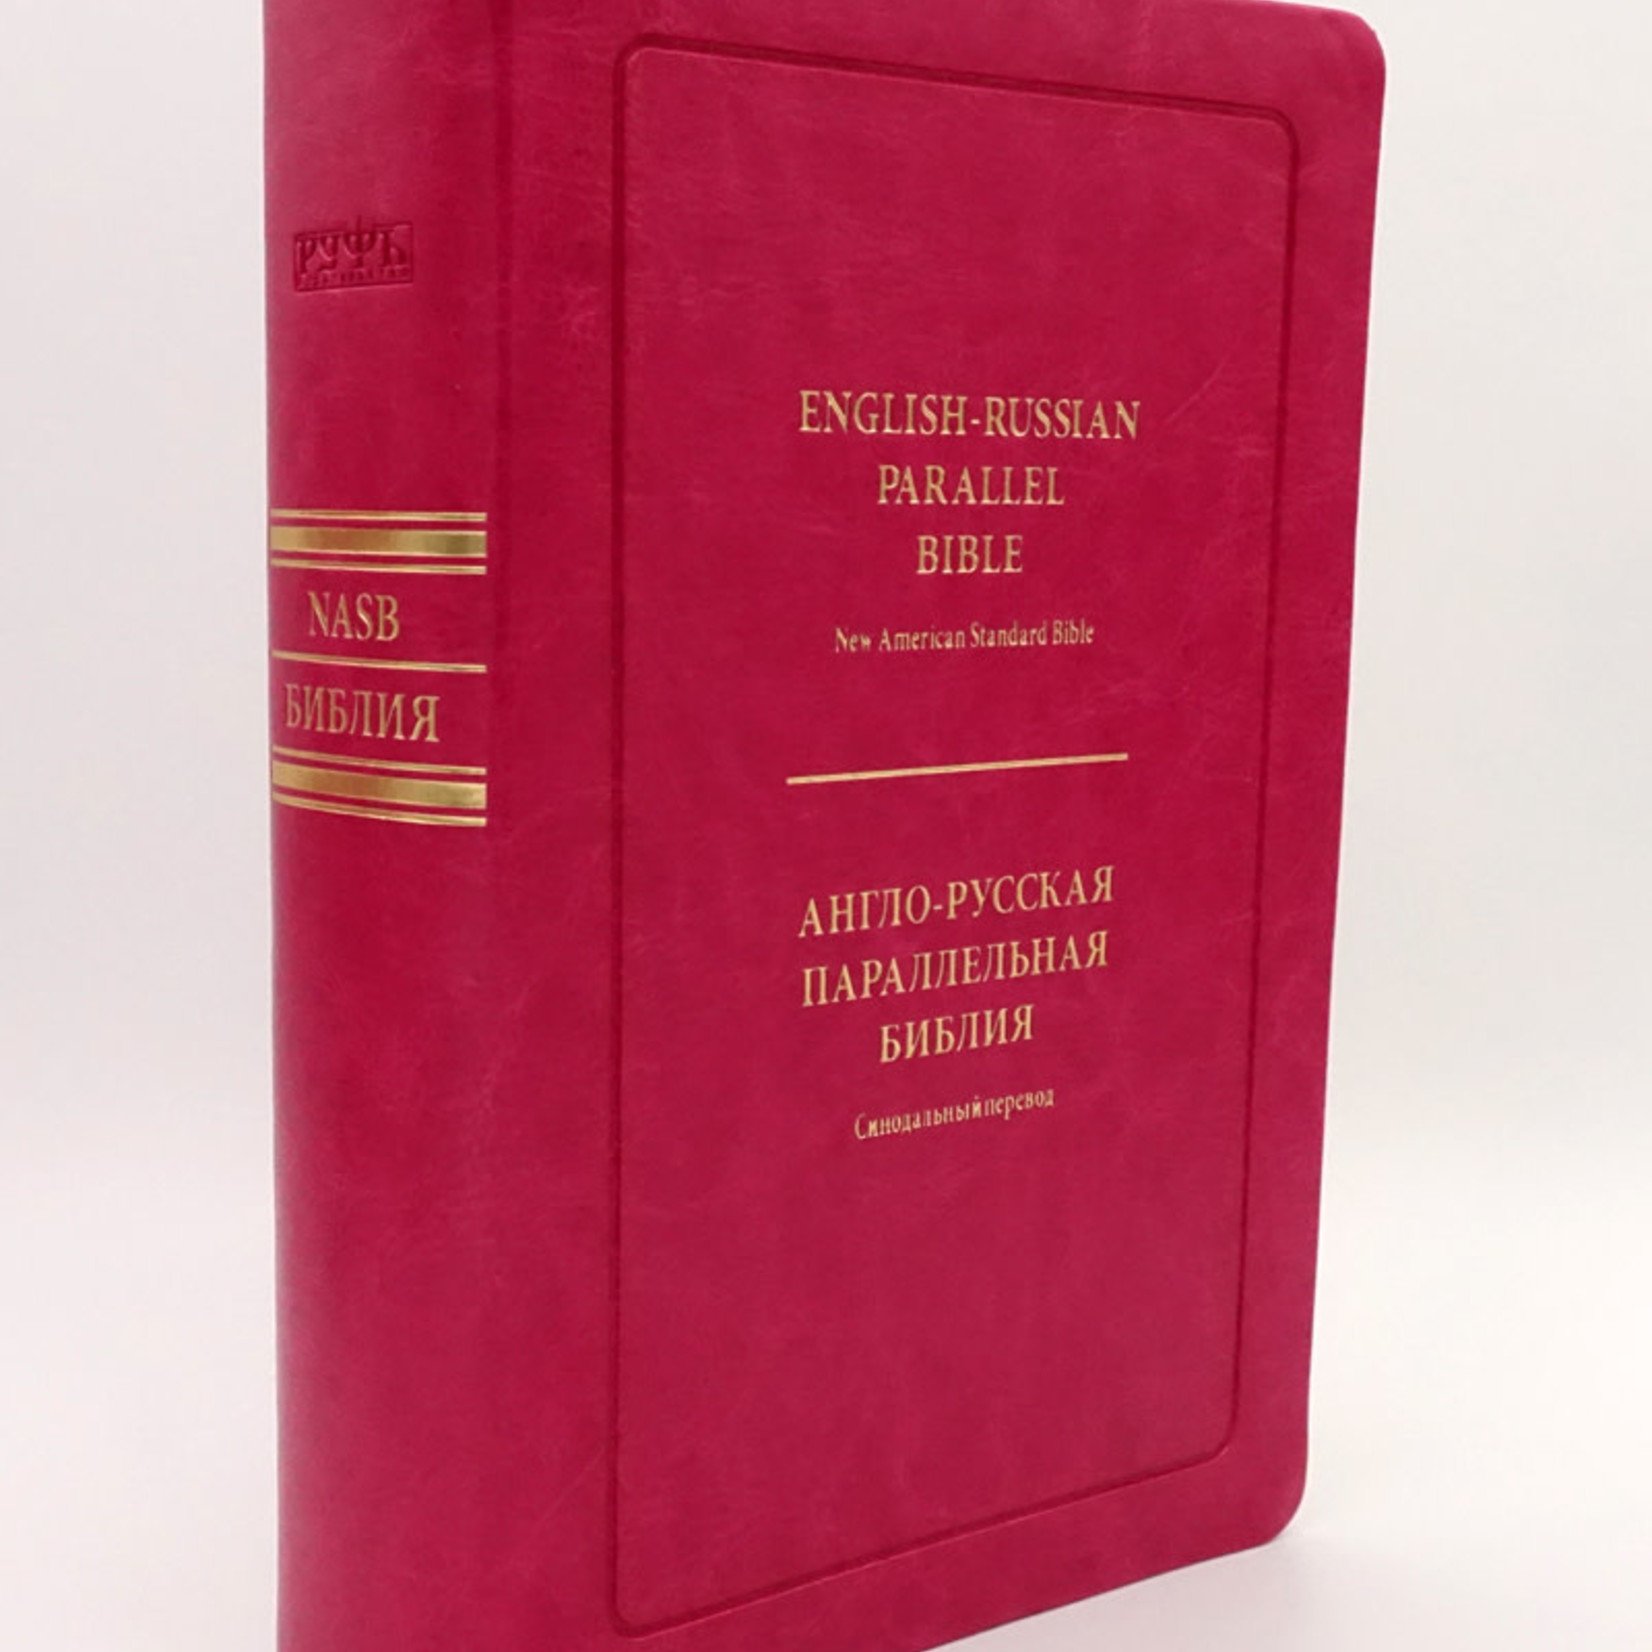 English-Russian Parallel Bible (NASB-SYNO), Index, Medium, Pink